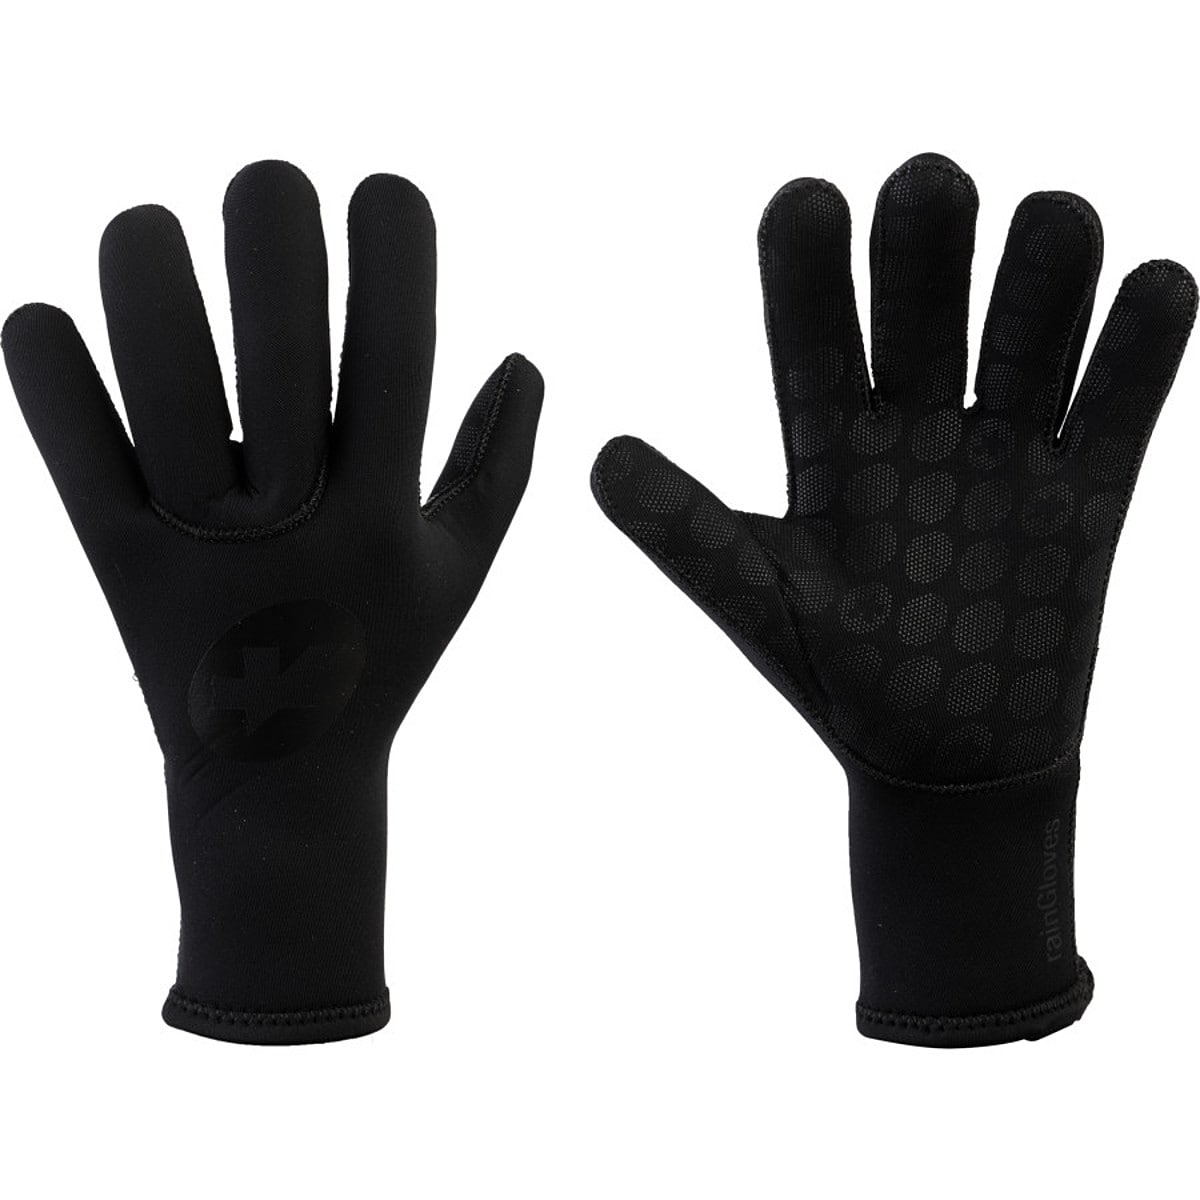 Assos rainGlovess7 Gloves Men's